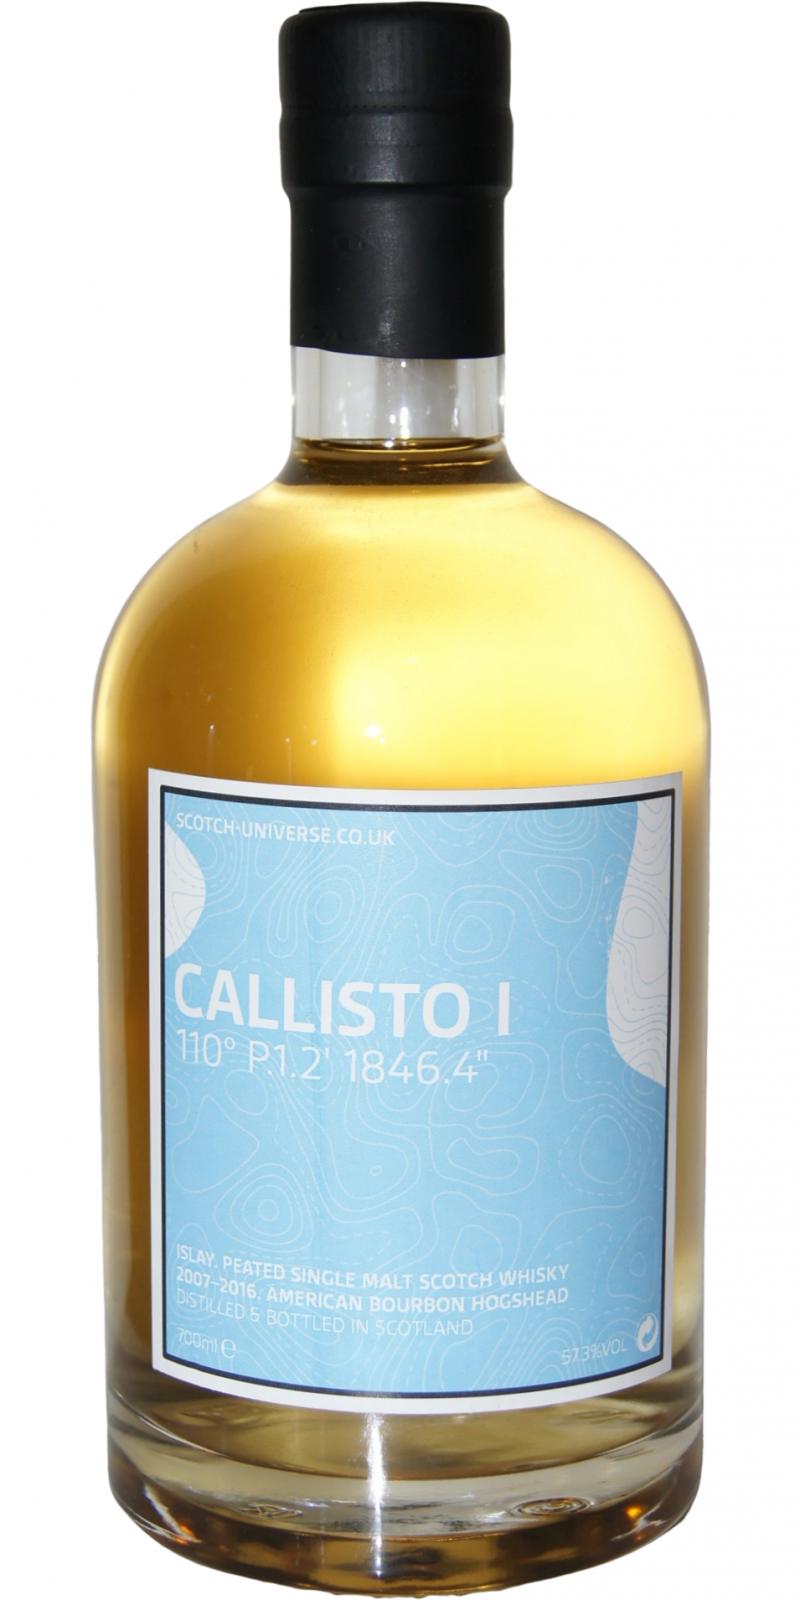 Scotch Universe Callisto I 110 P.1.2 1846.4 American Bourbon Hogshead 57.3% 700ml